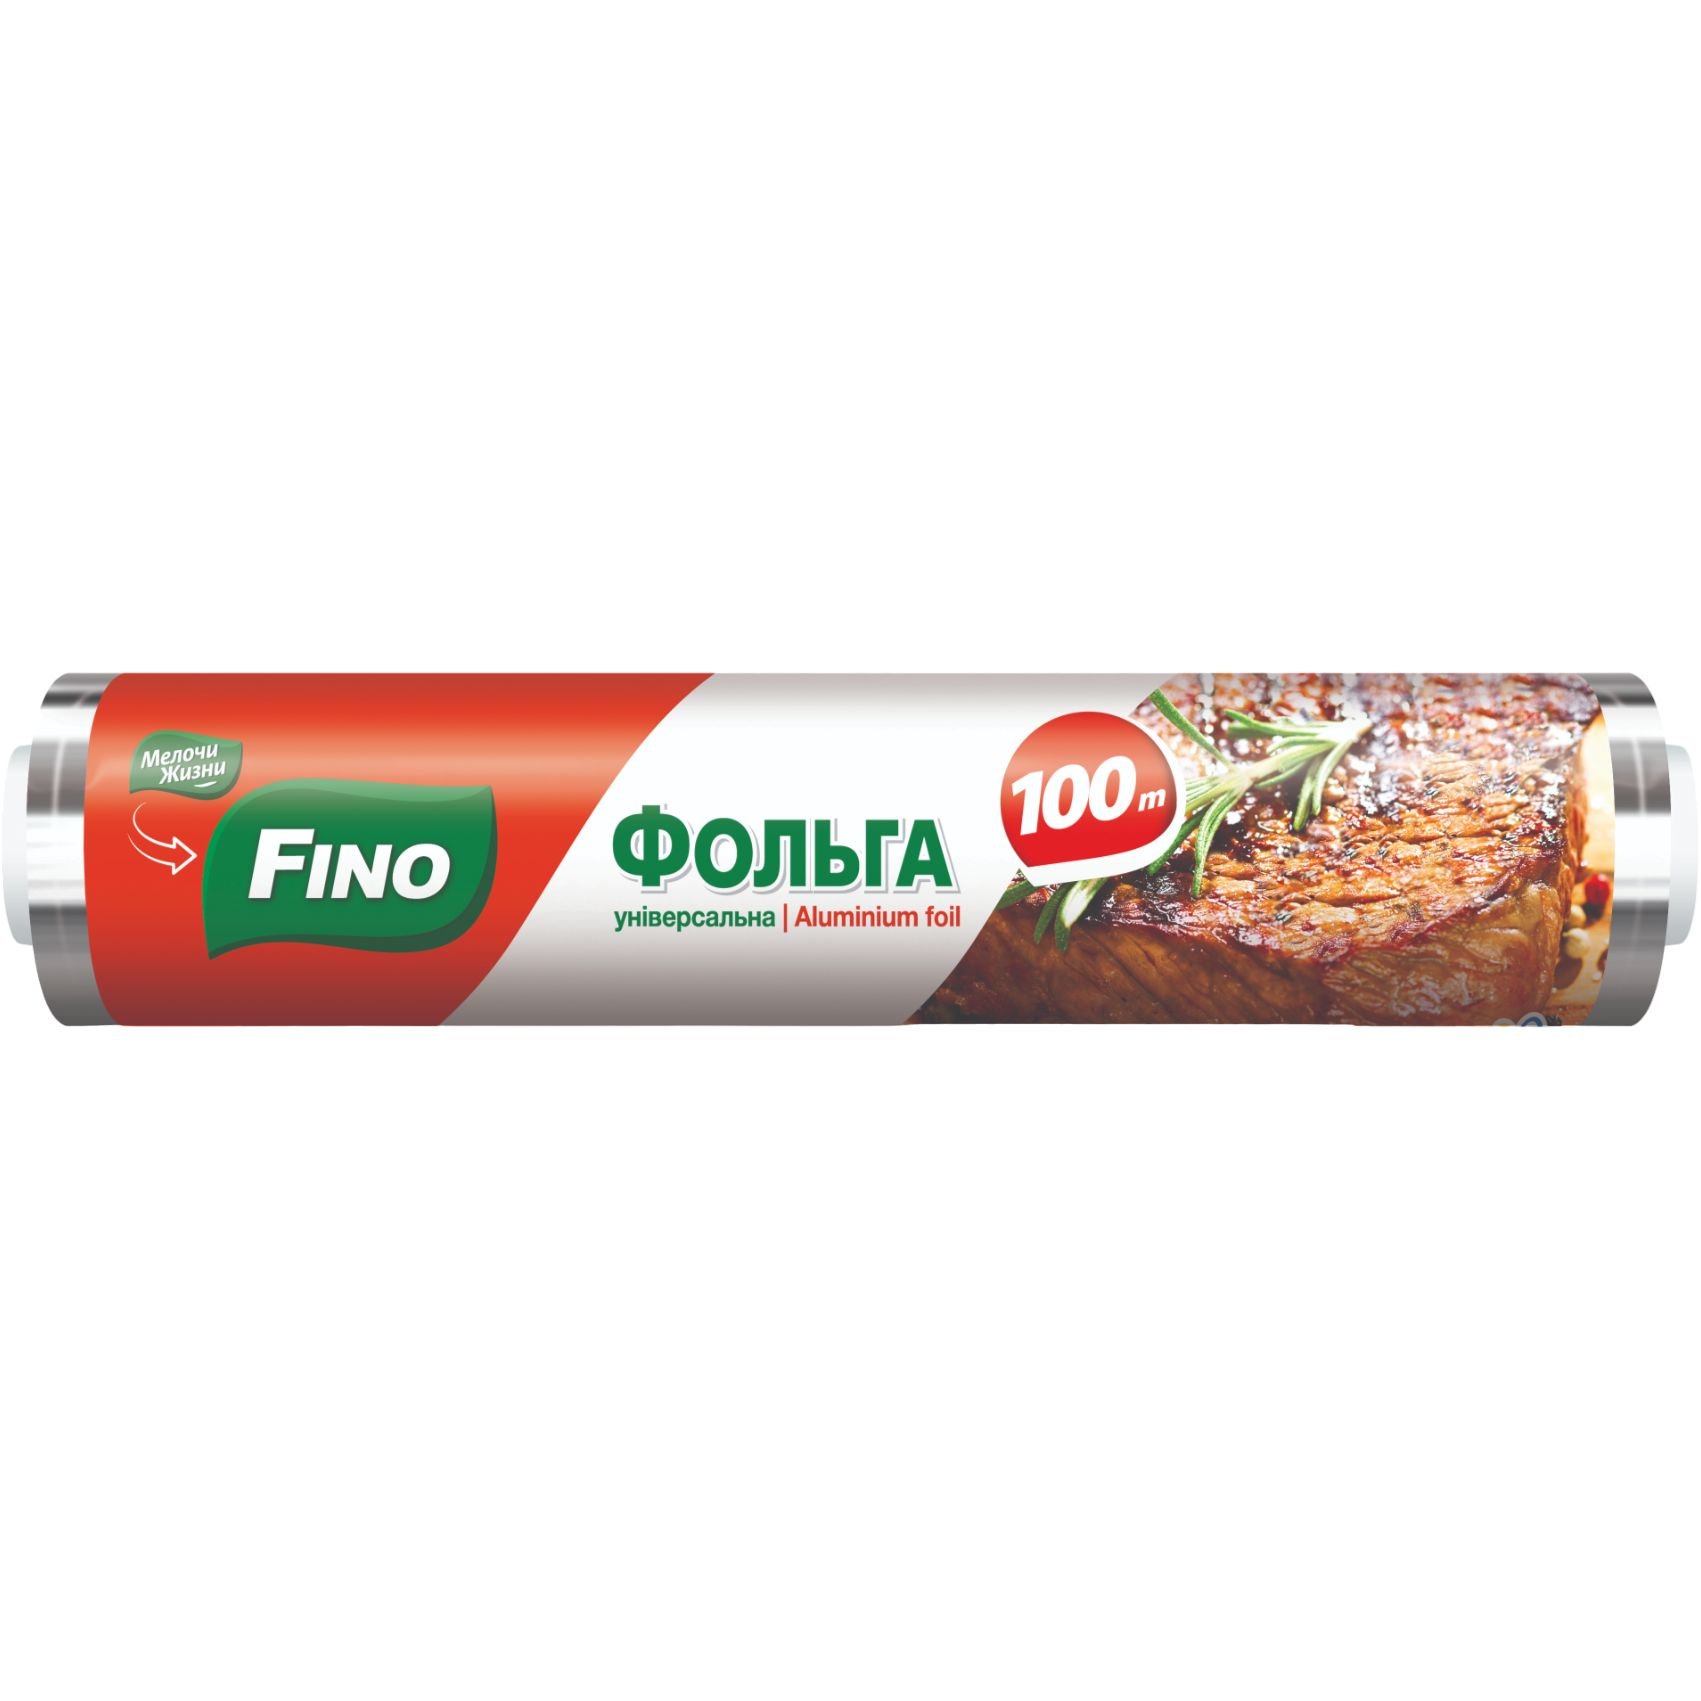 Фольга алюминиевая Fino 100 м - фото 1